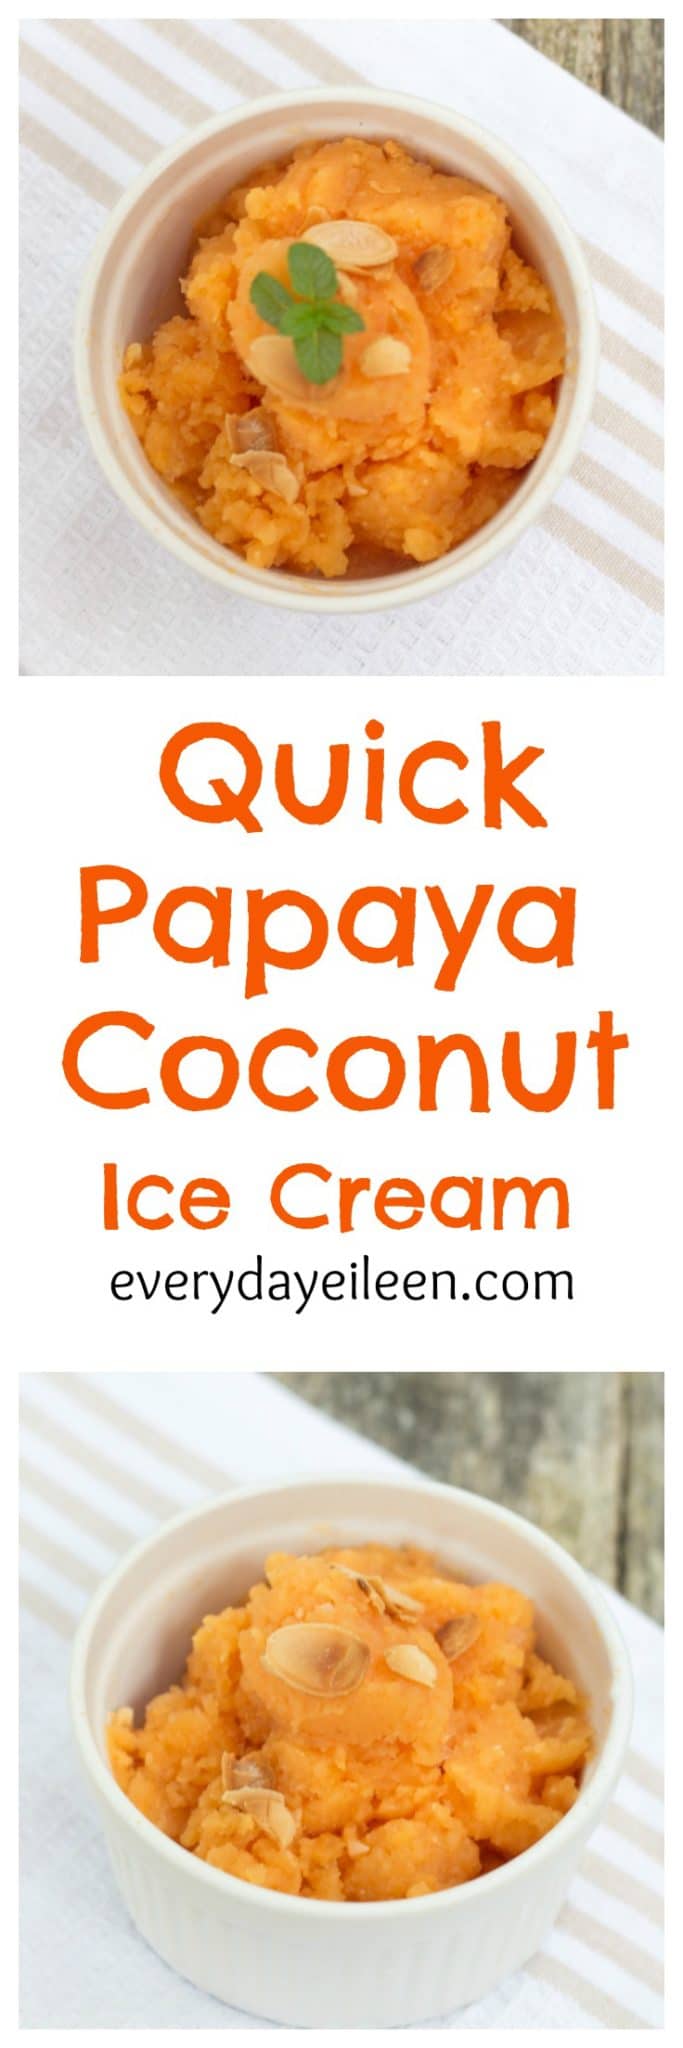 quick papaya coconut ice cream